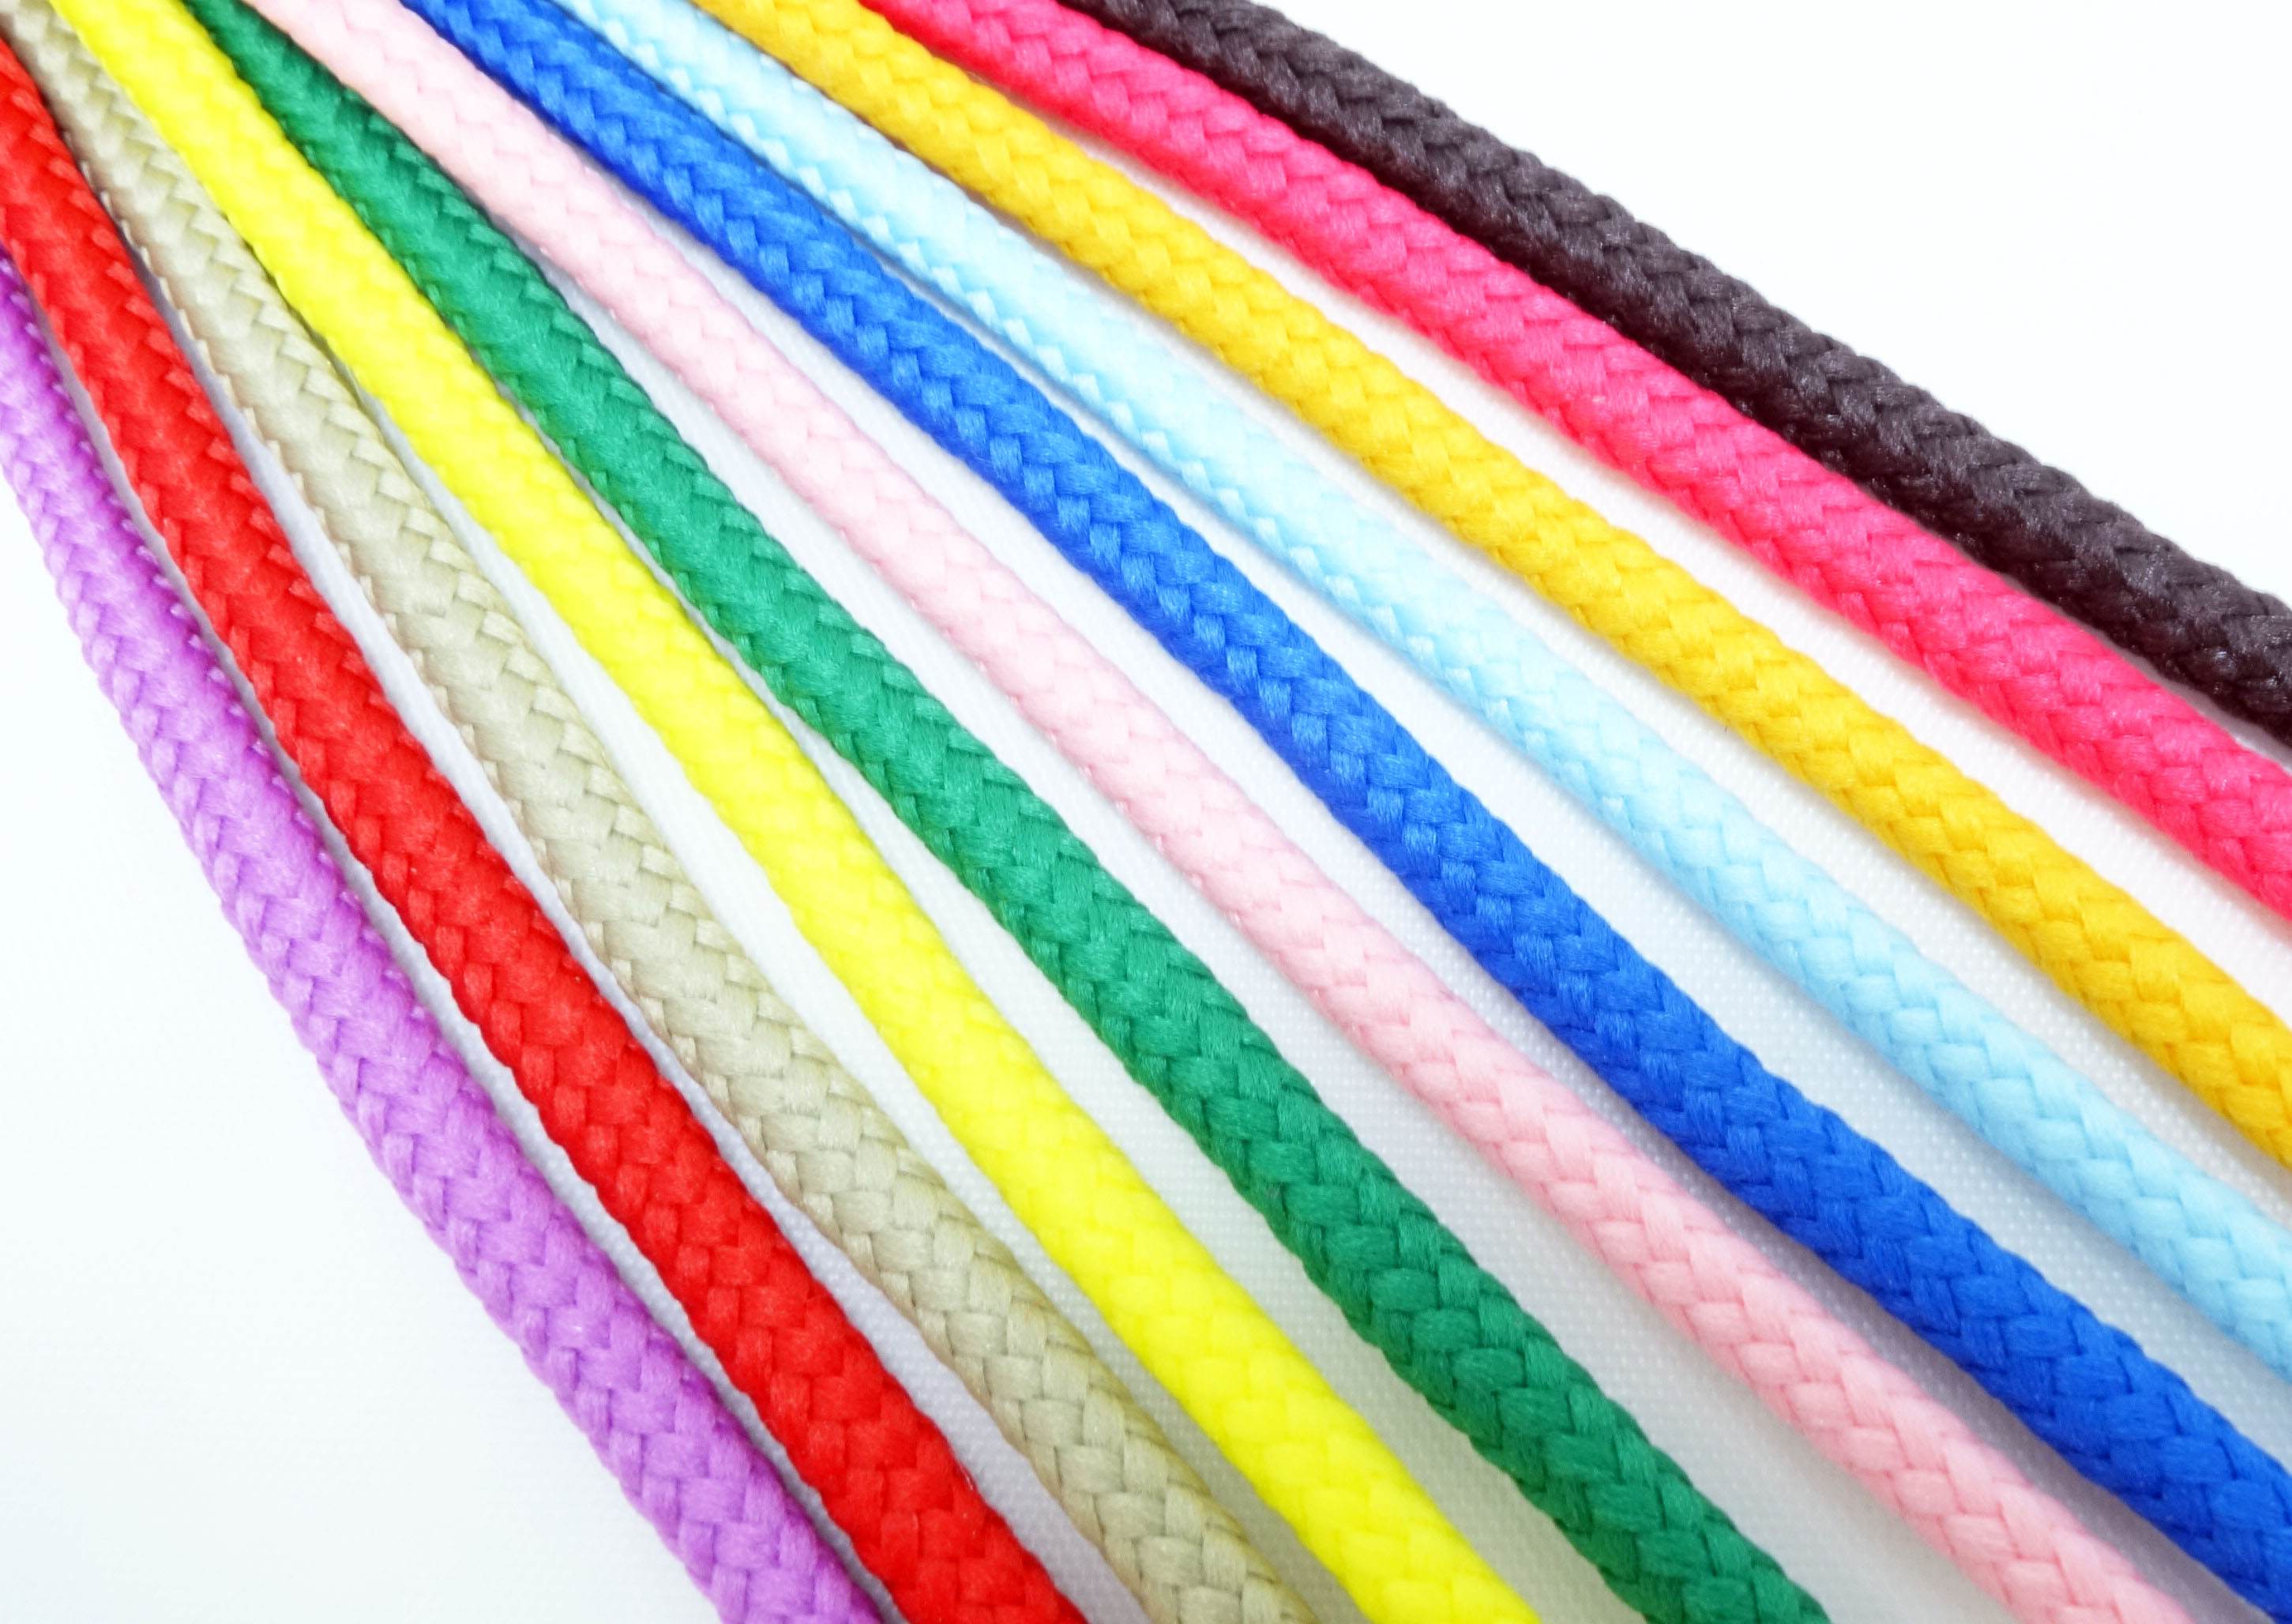 rigid textile cords braided